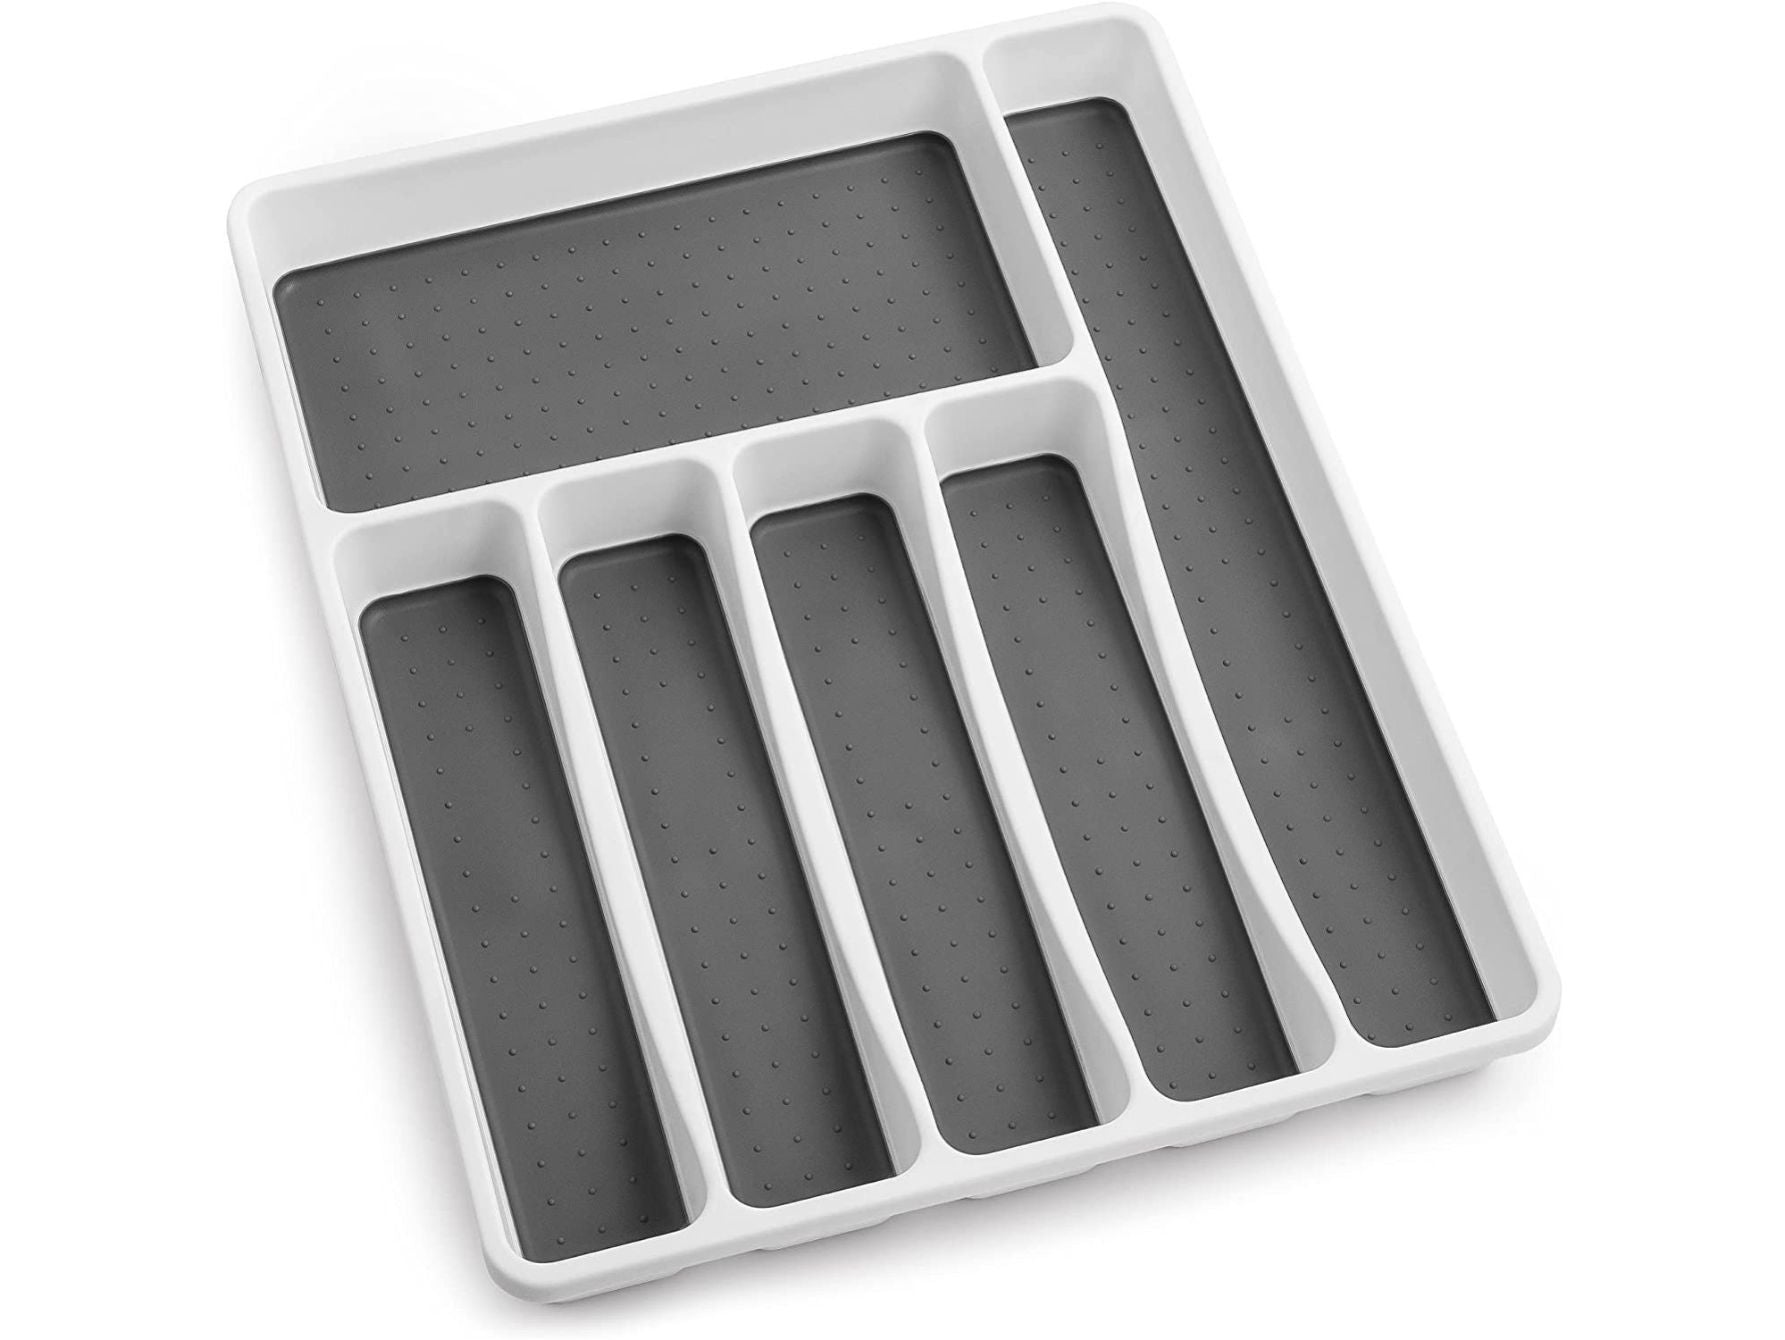 Zulay Kitchen 6 Compartment Silverware Organizer Tray Polypropylene, White